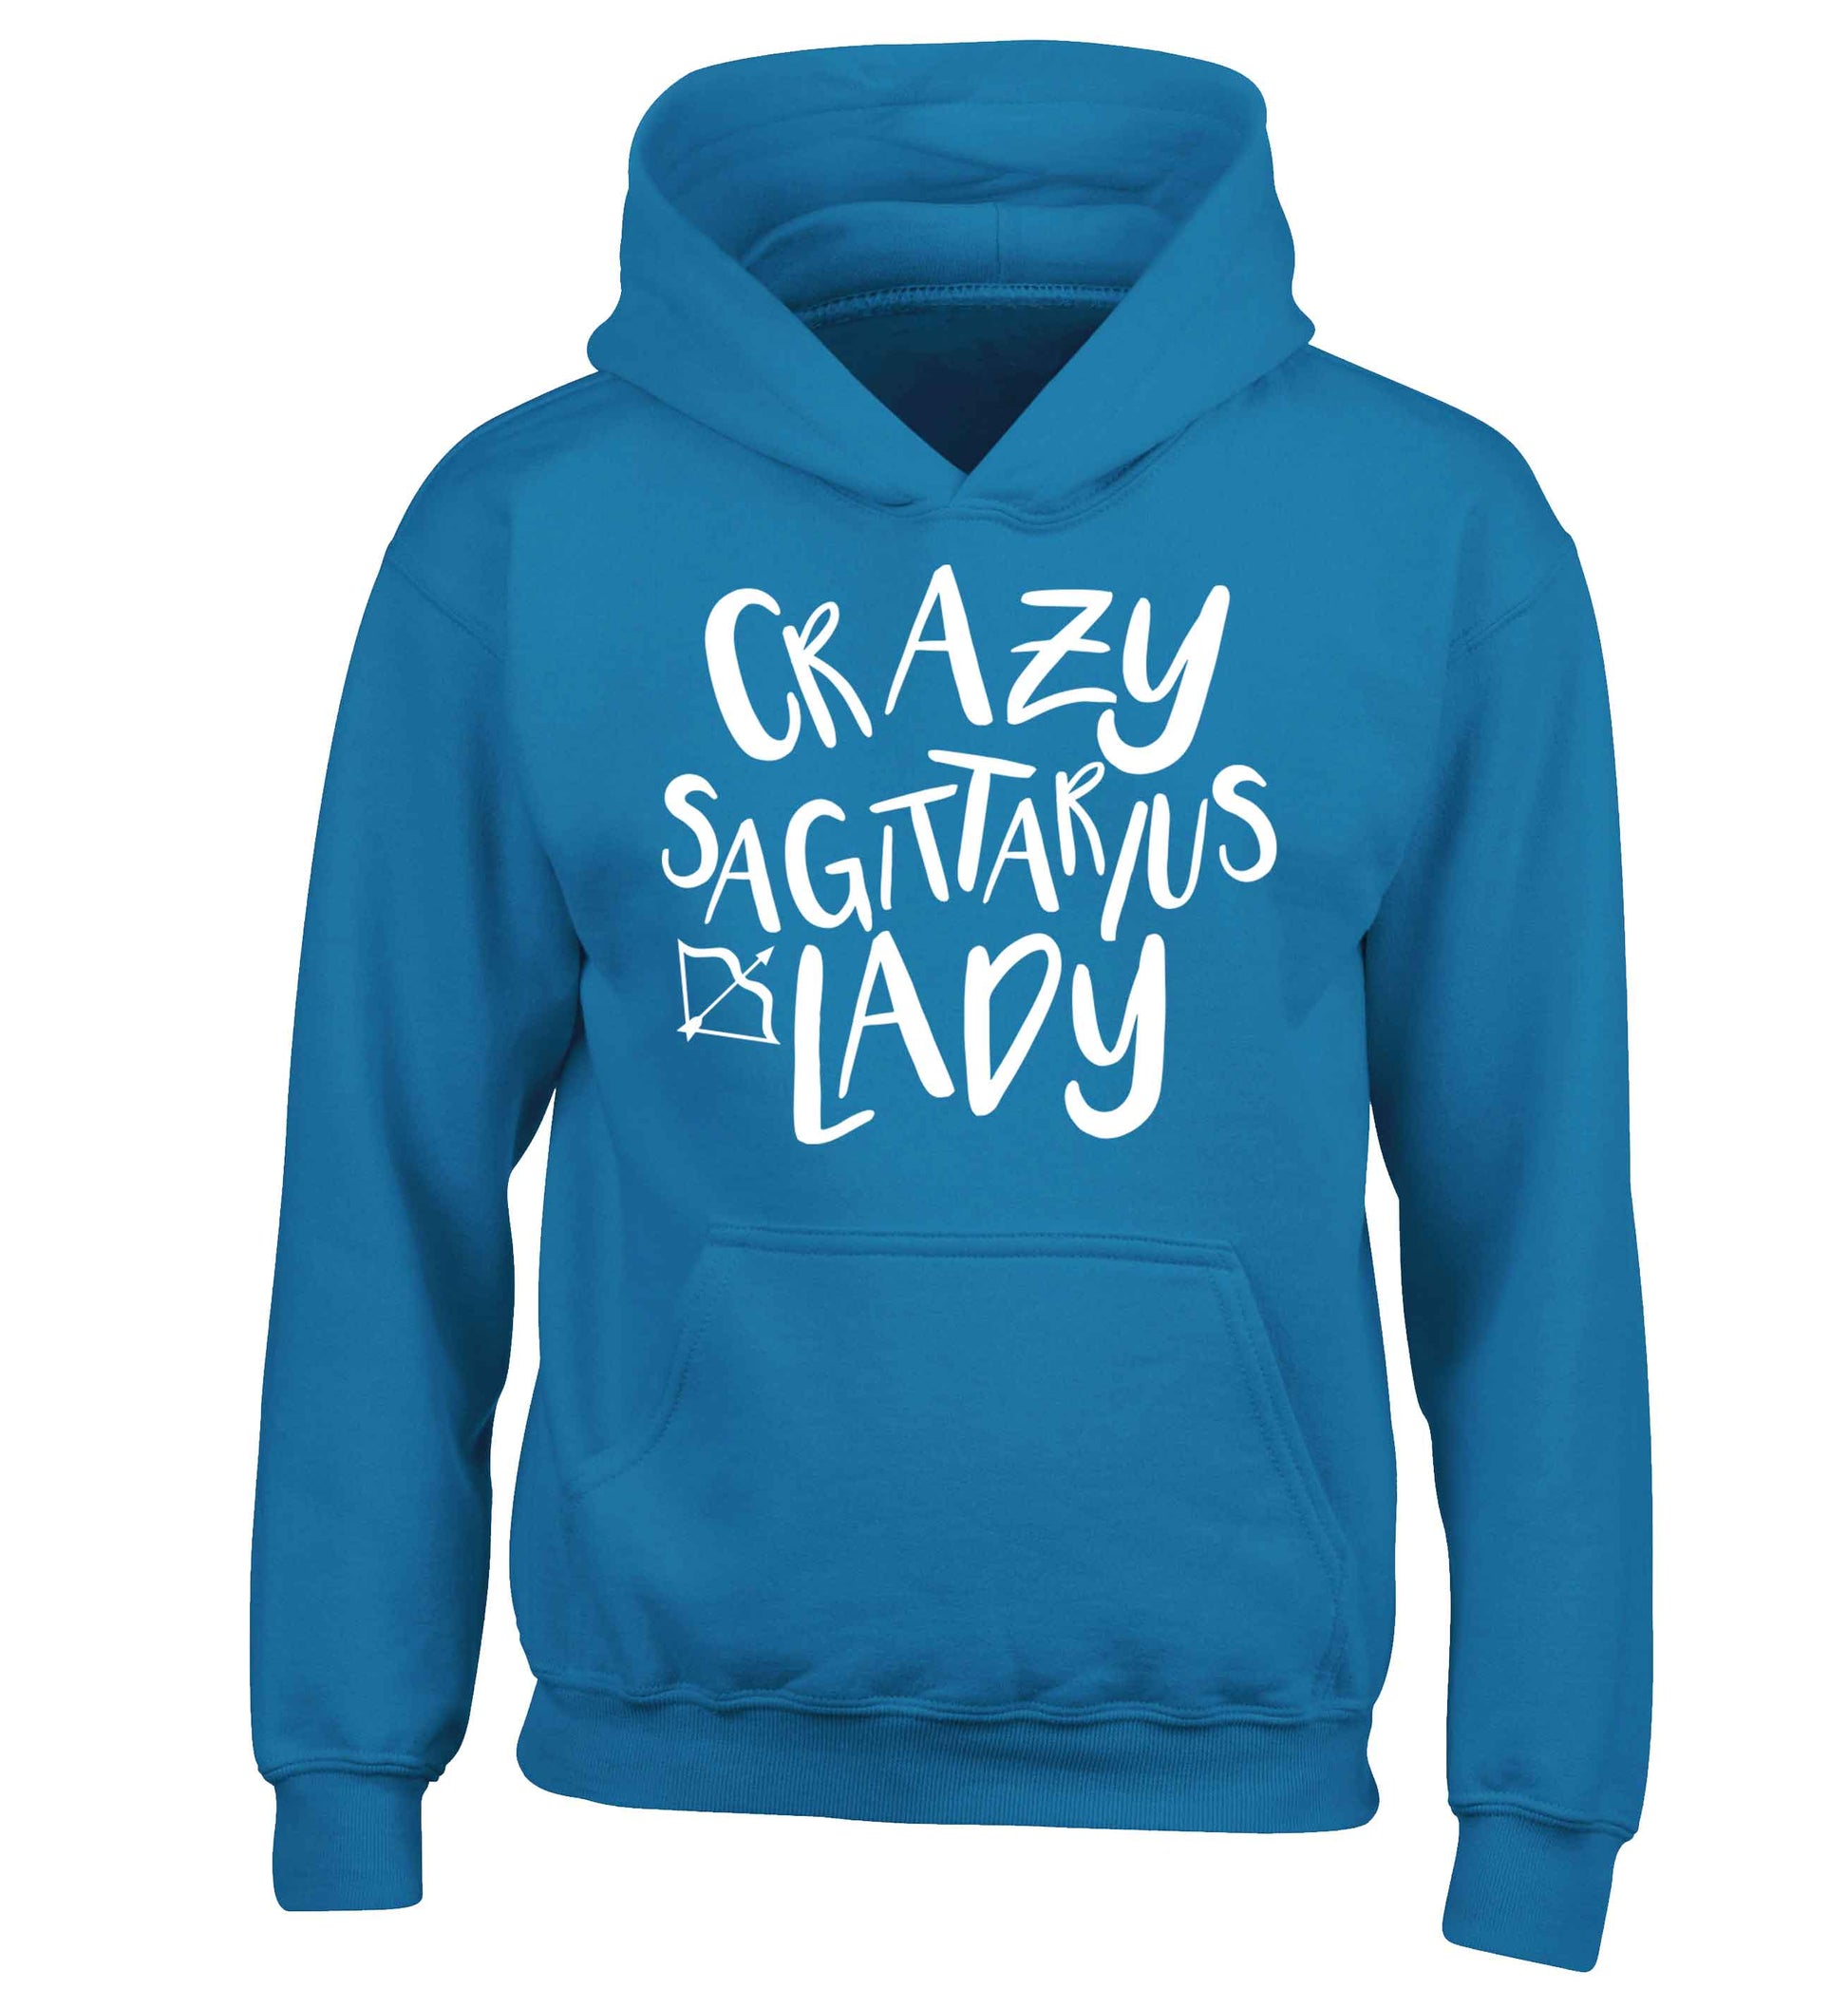 Crazy sagittarius lady children's blue hoodie 12-13 Years